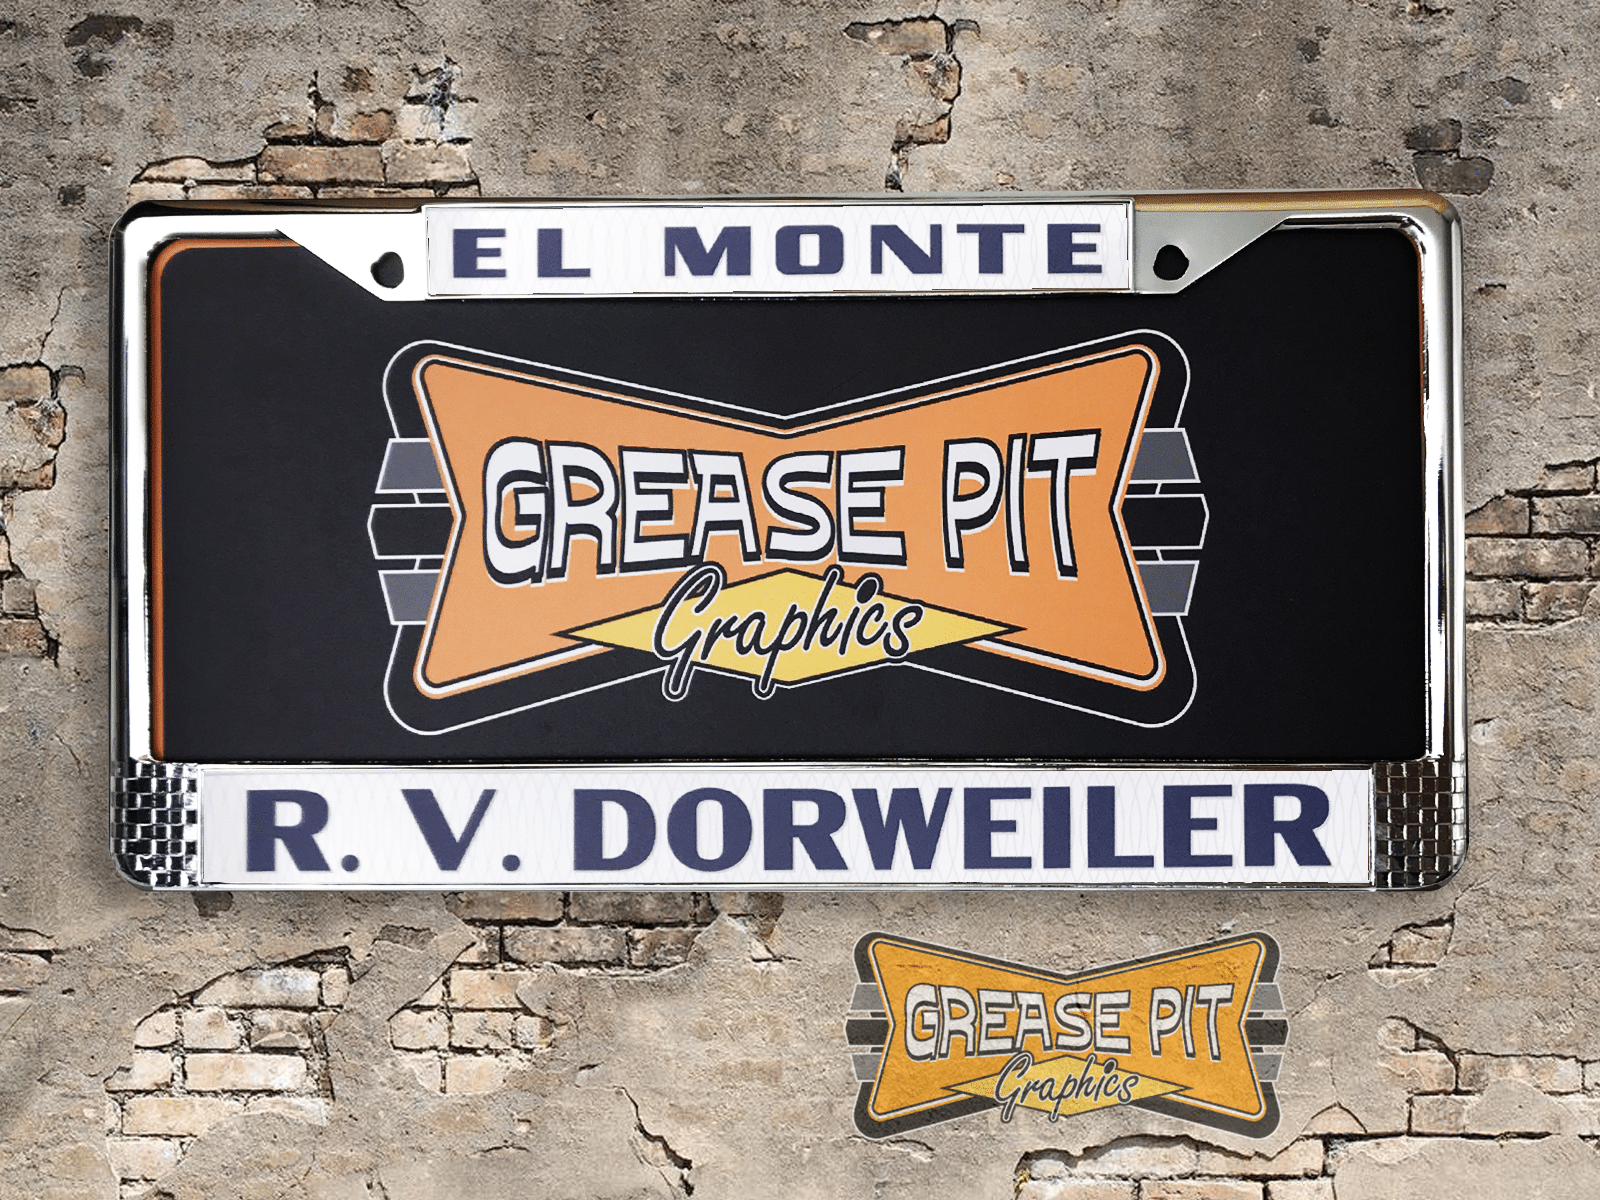 RV Dorweiler Chevrolet El Monte License Plate Frame Tribute